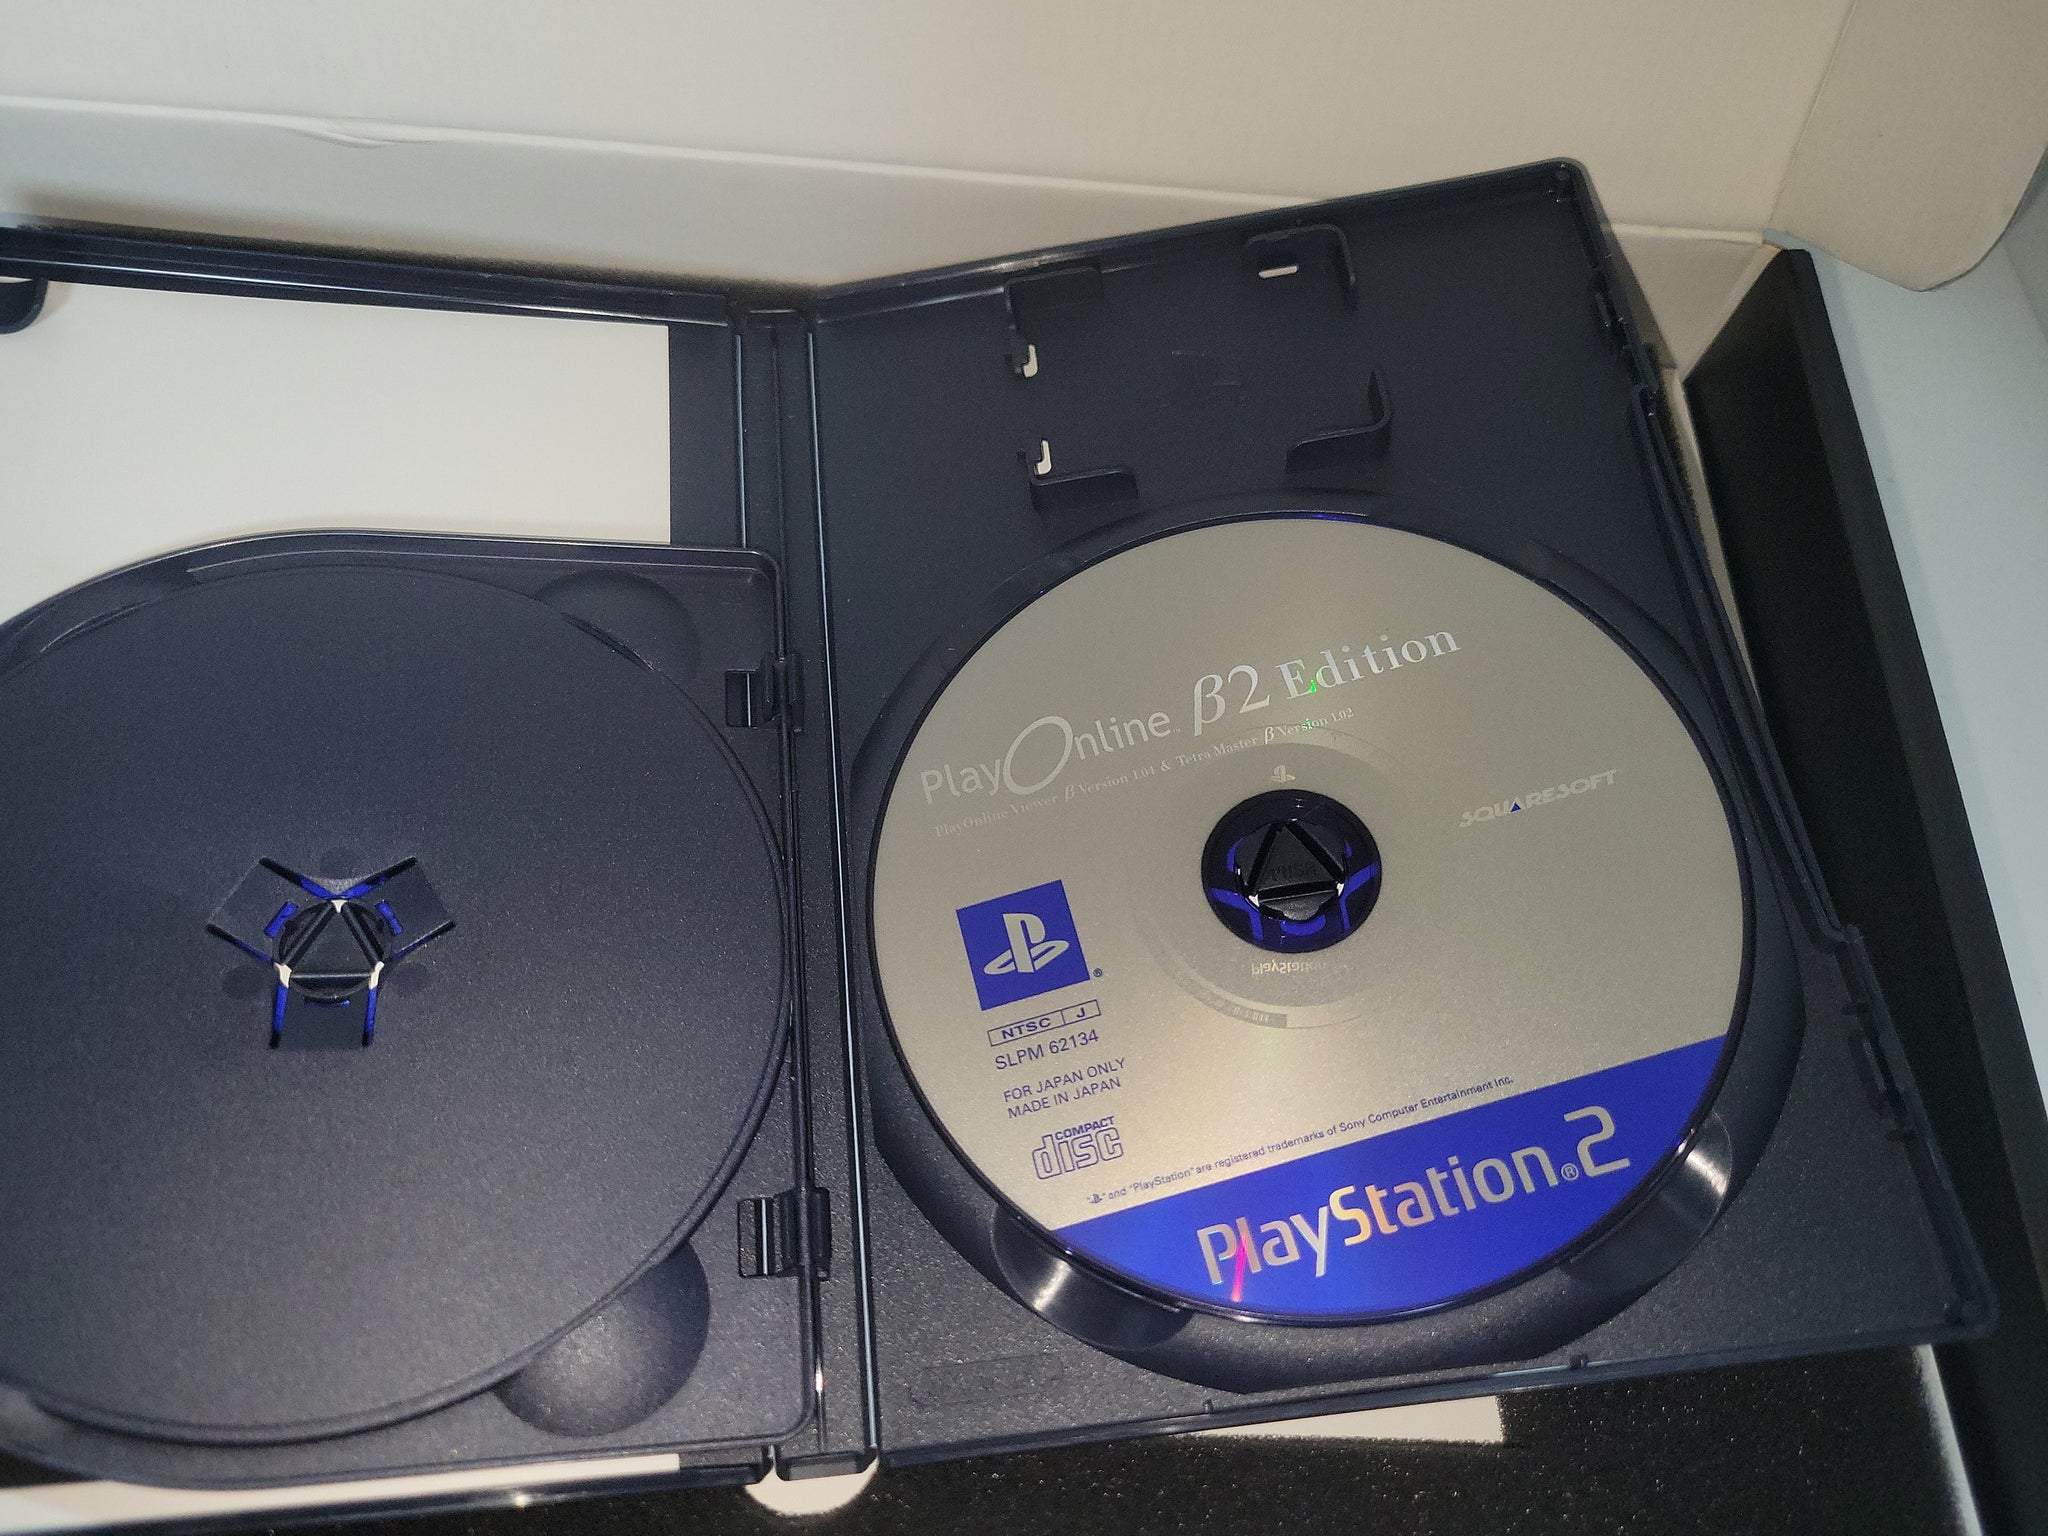 Final Fantasy XI PlayOnline β2 Edition & Tetra Master β Version - Sony  playstation 2